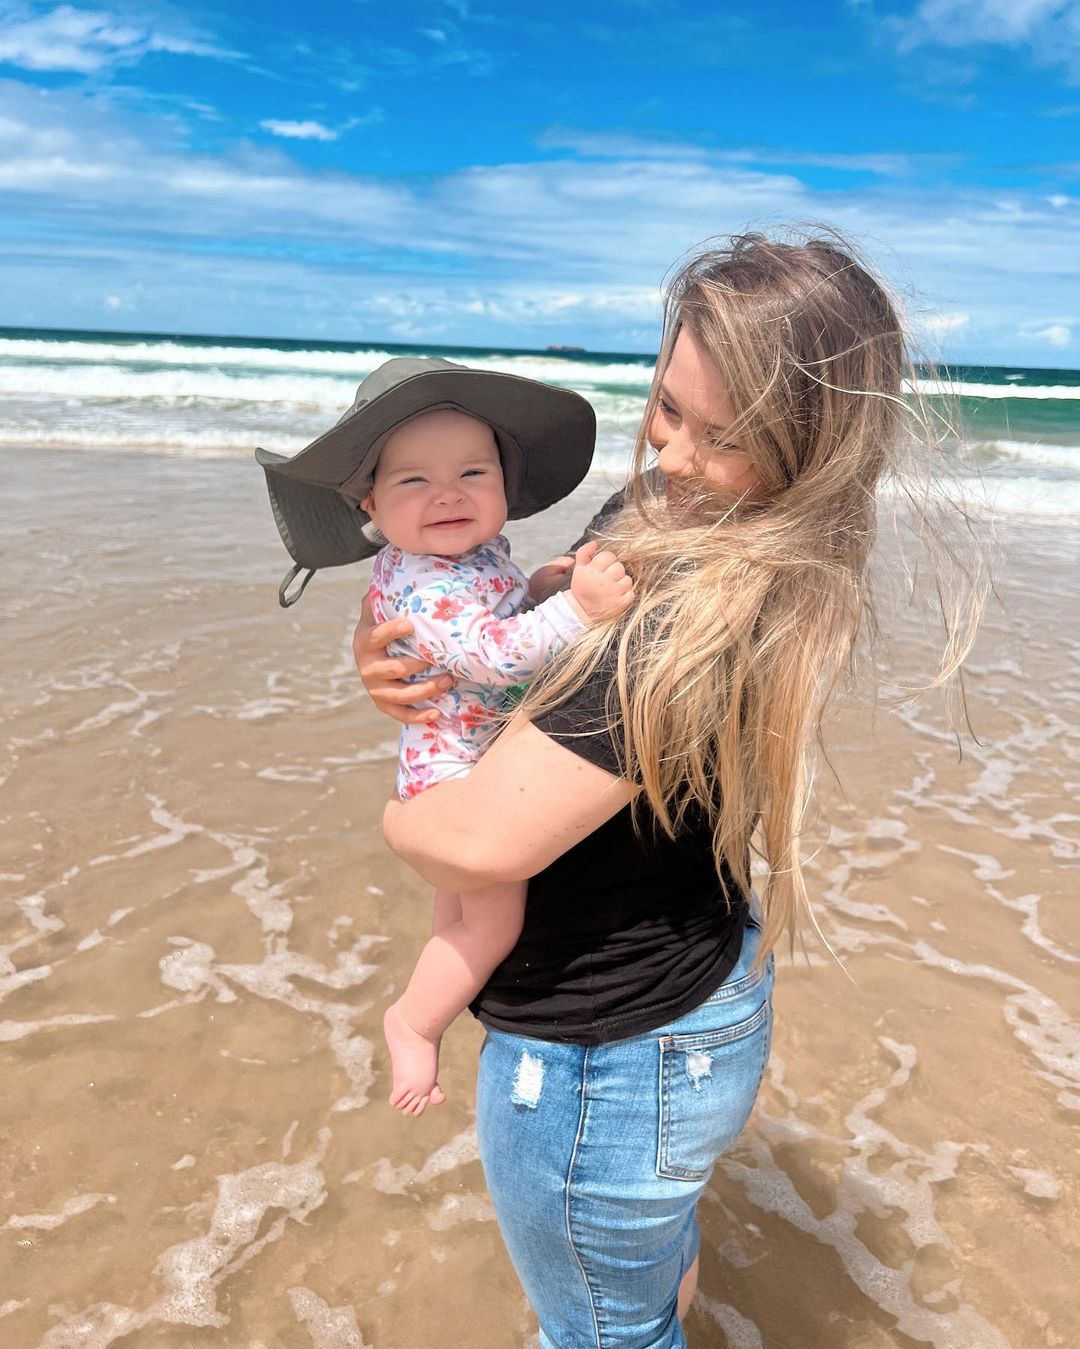 Beach Baby! Bindi Irwin Shares Sandy Snap With 'Sunshine' Daughter Grace